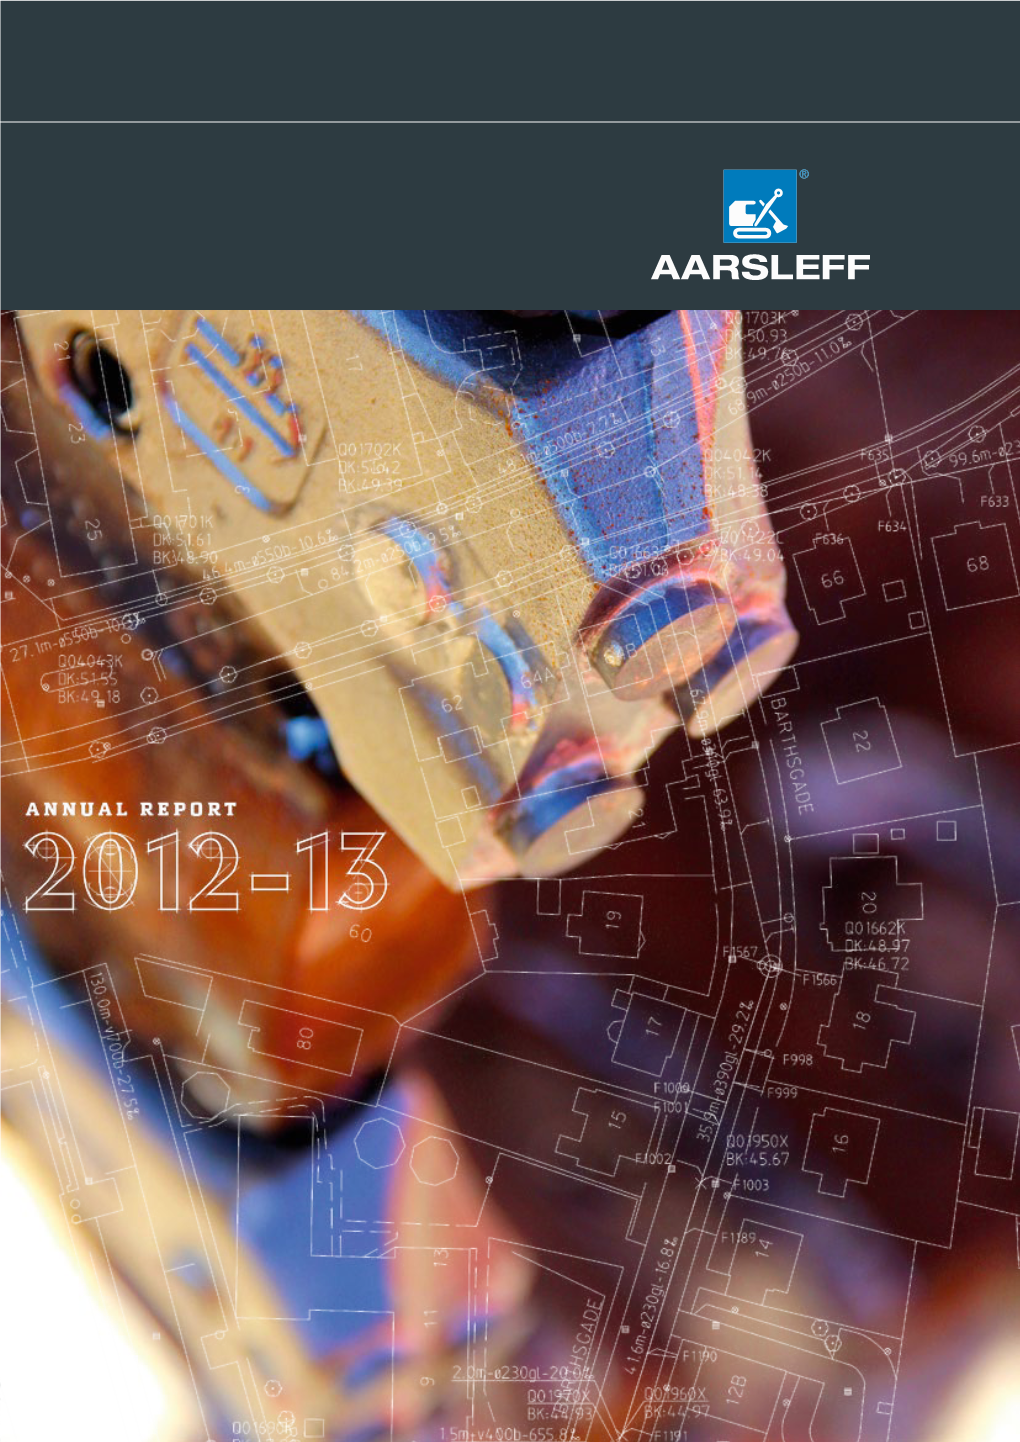 Per Aarsleff A/S Annual Report 2012-13Report Annual